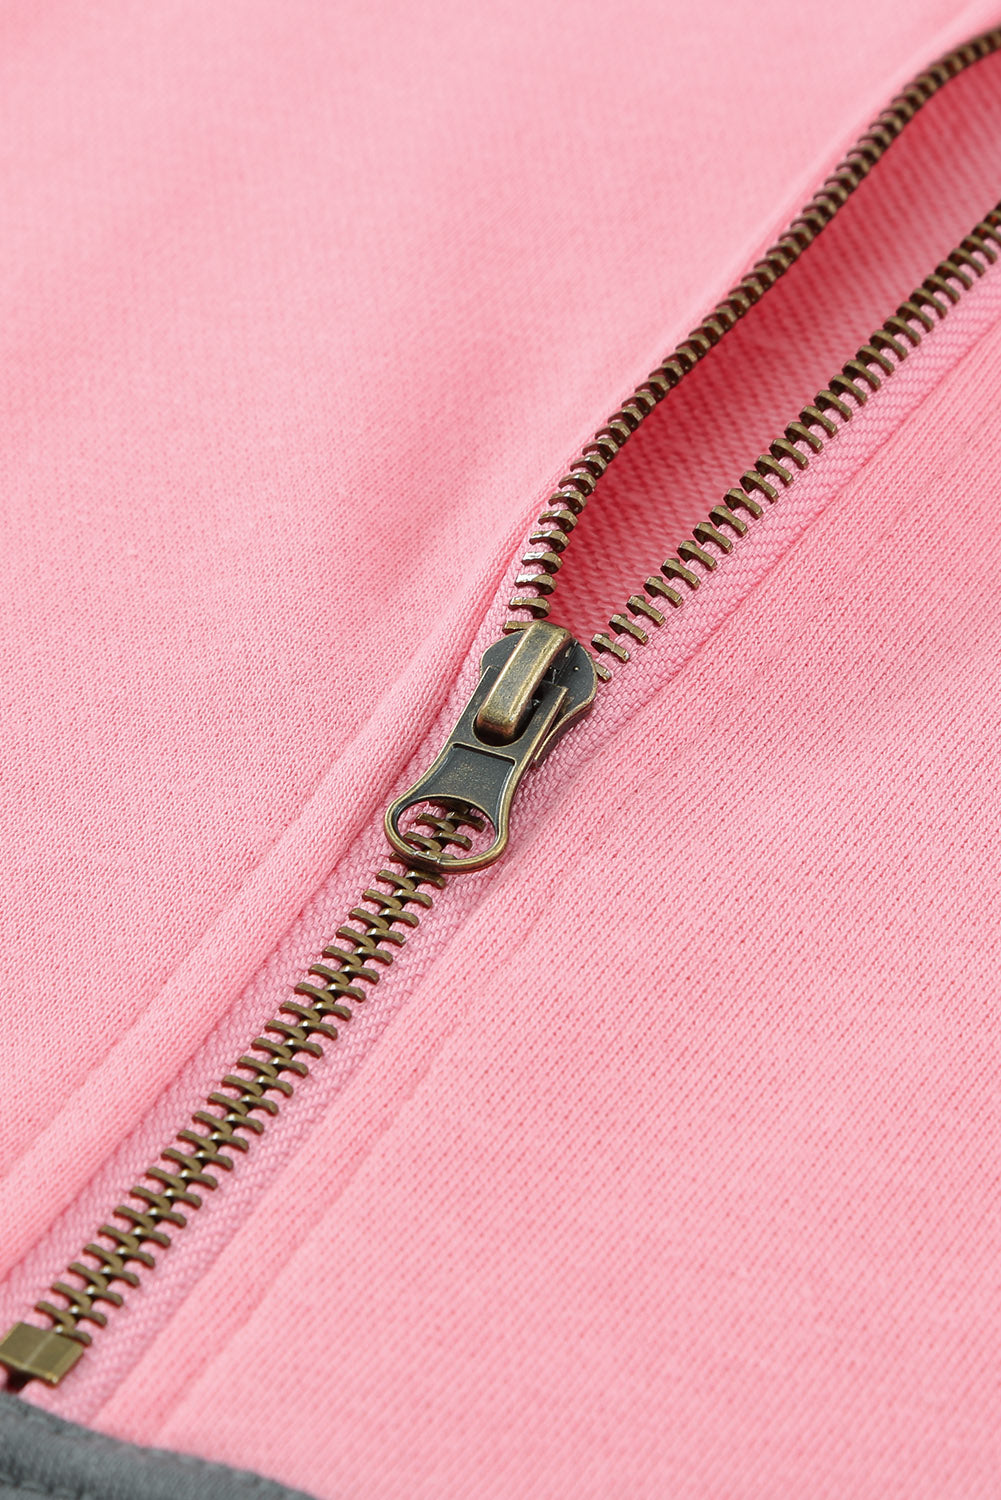 Black Zipped Colorblock Sweatshirt with Pockets